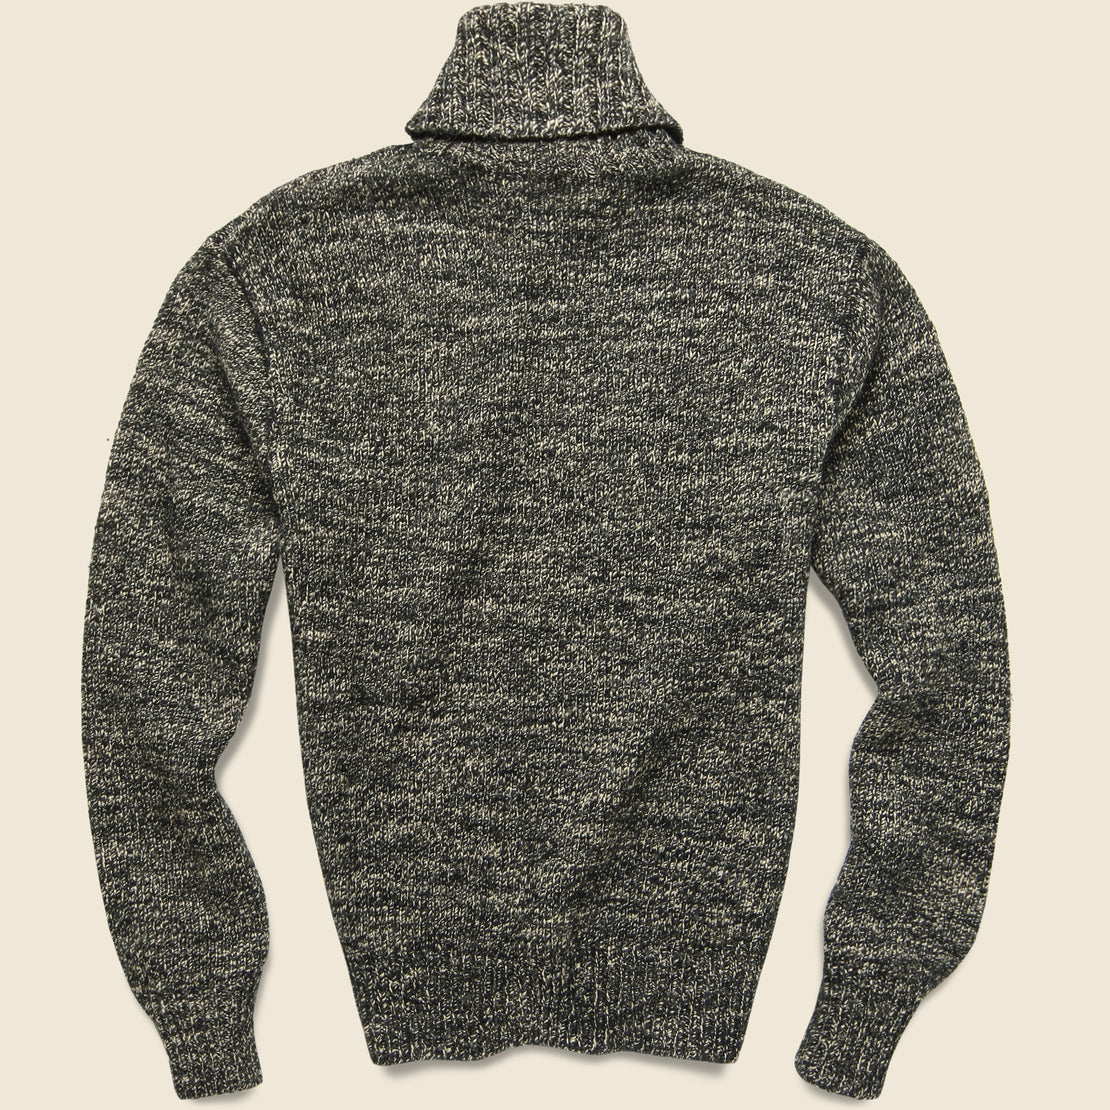 Turtleneck Pullover - Salt Pepper Marl - RRL - STAG Provisions - Tops - Sweater